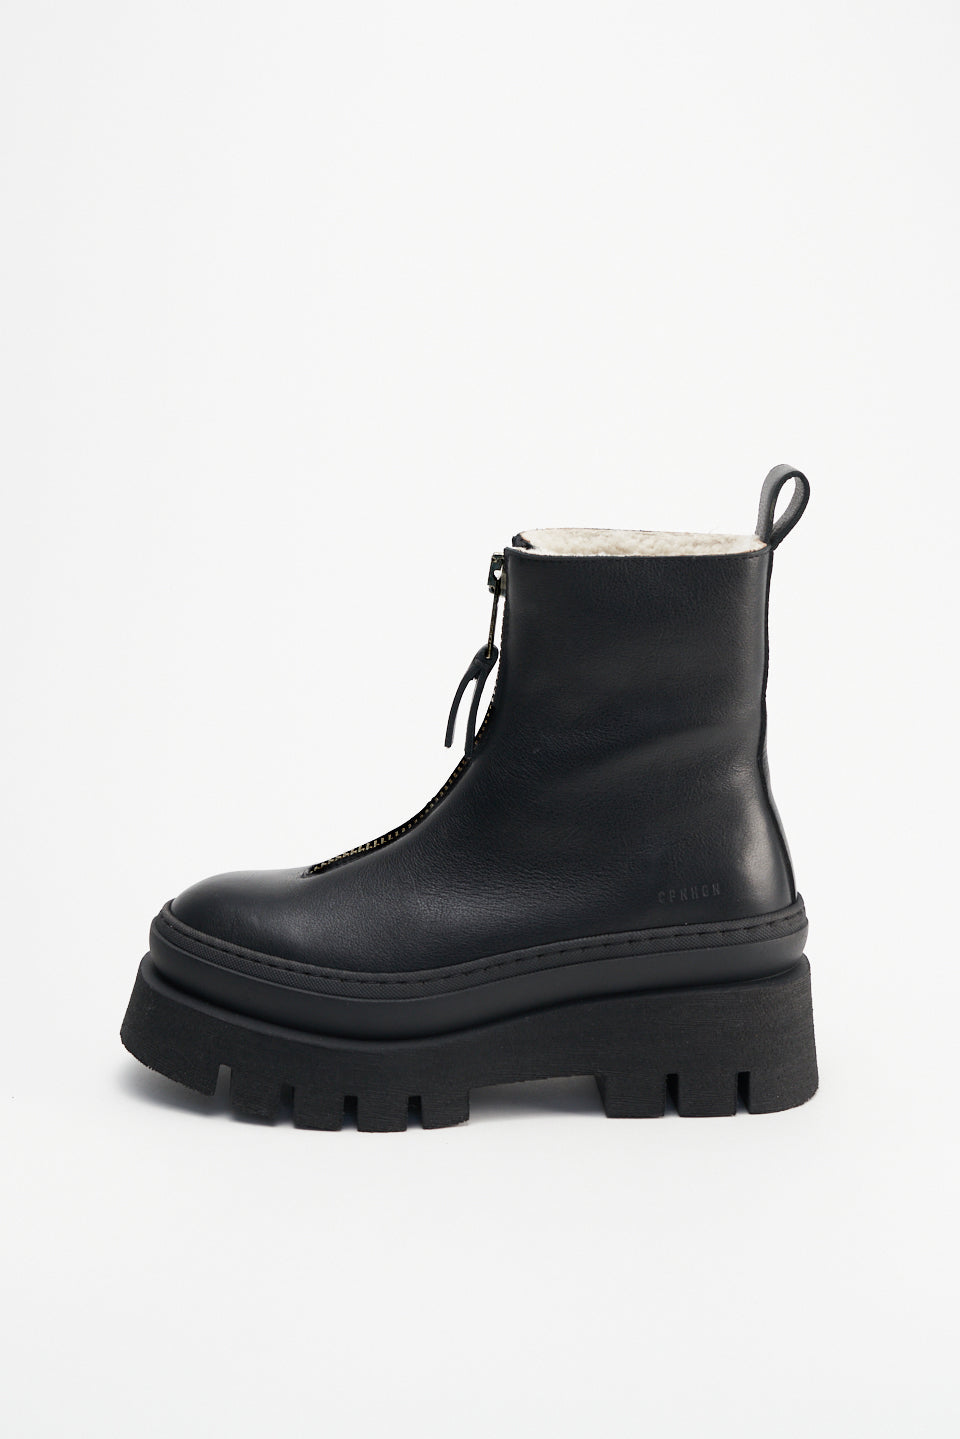 Vitello Black Front Zip Winter Boots CPH591_BLACK - 6